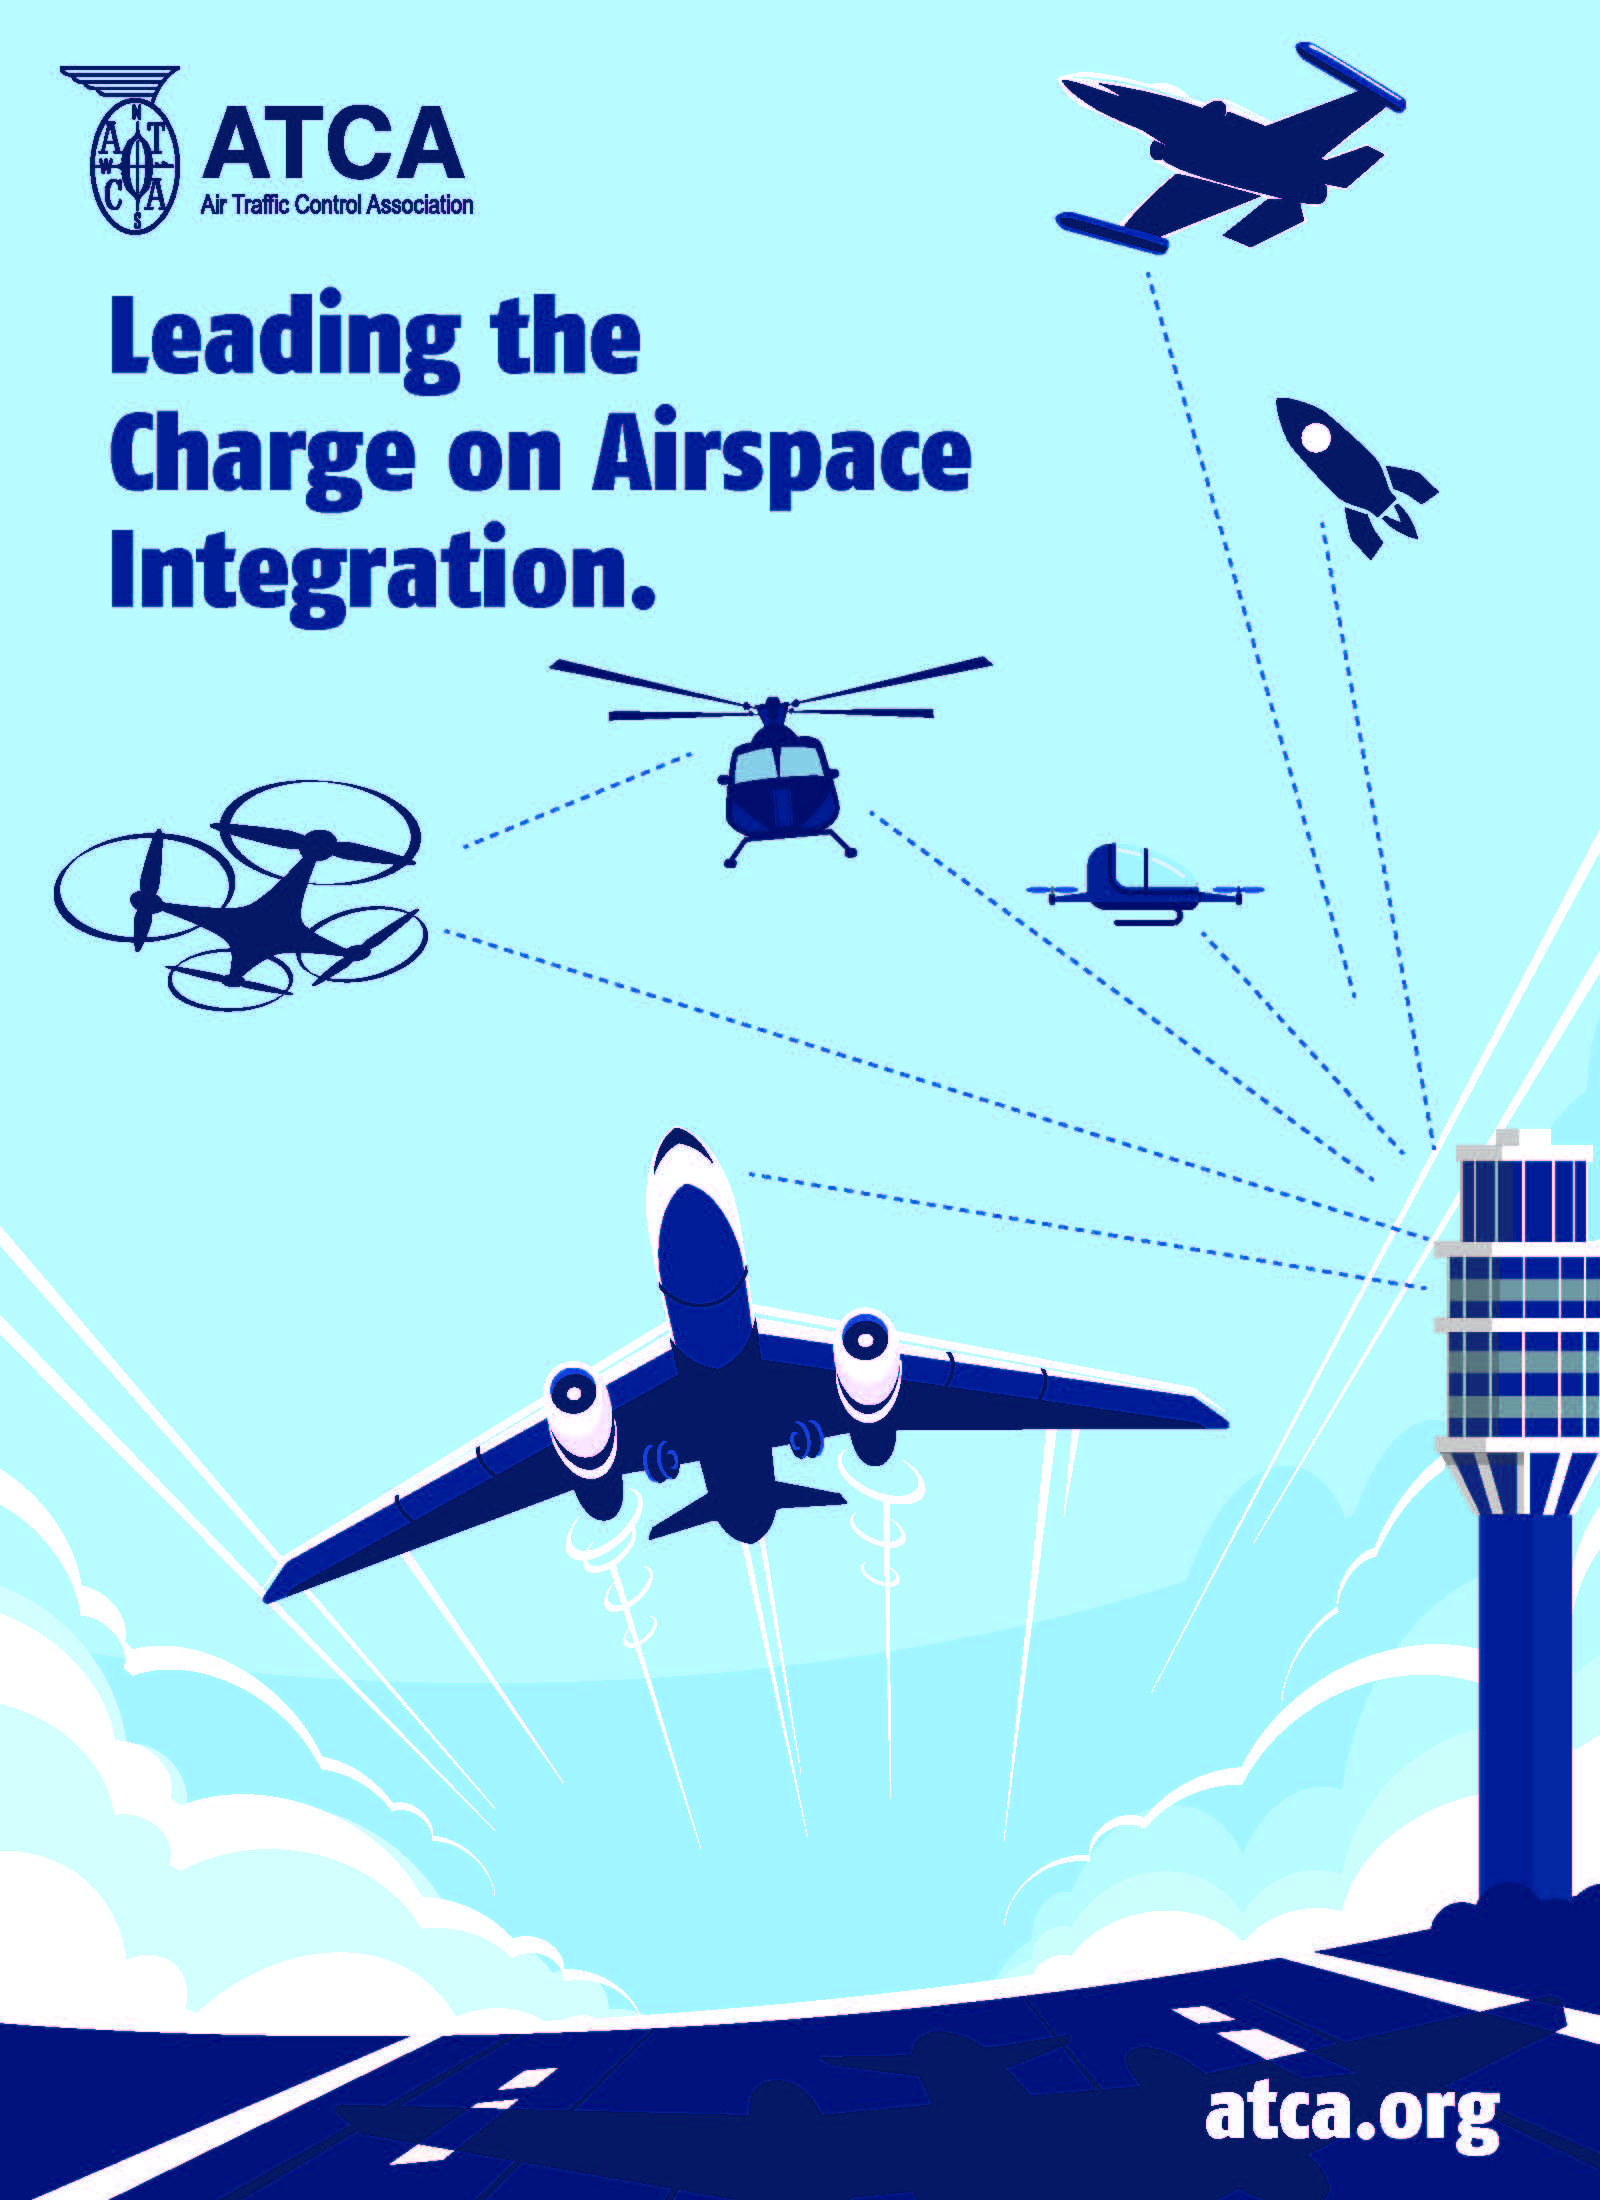 ATCA Airspace Integration